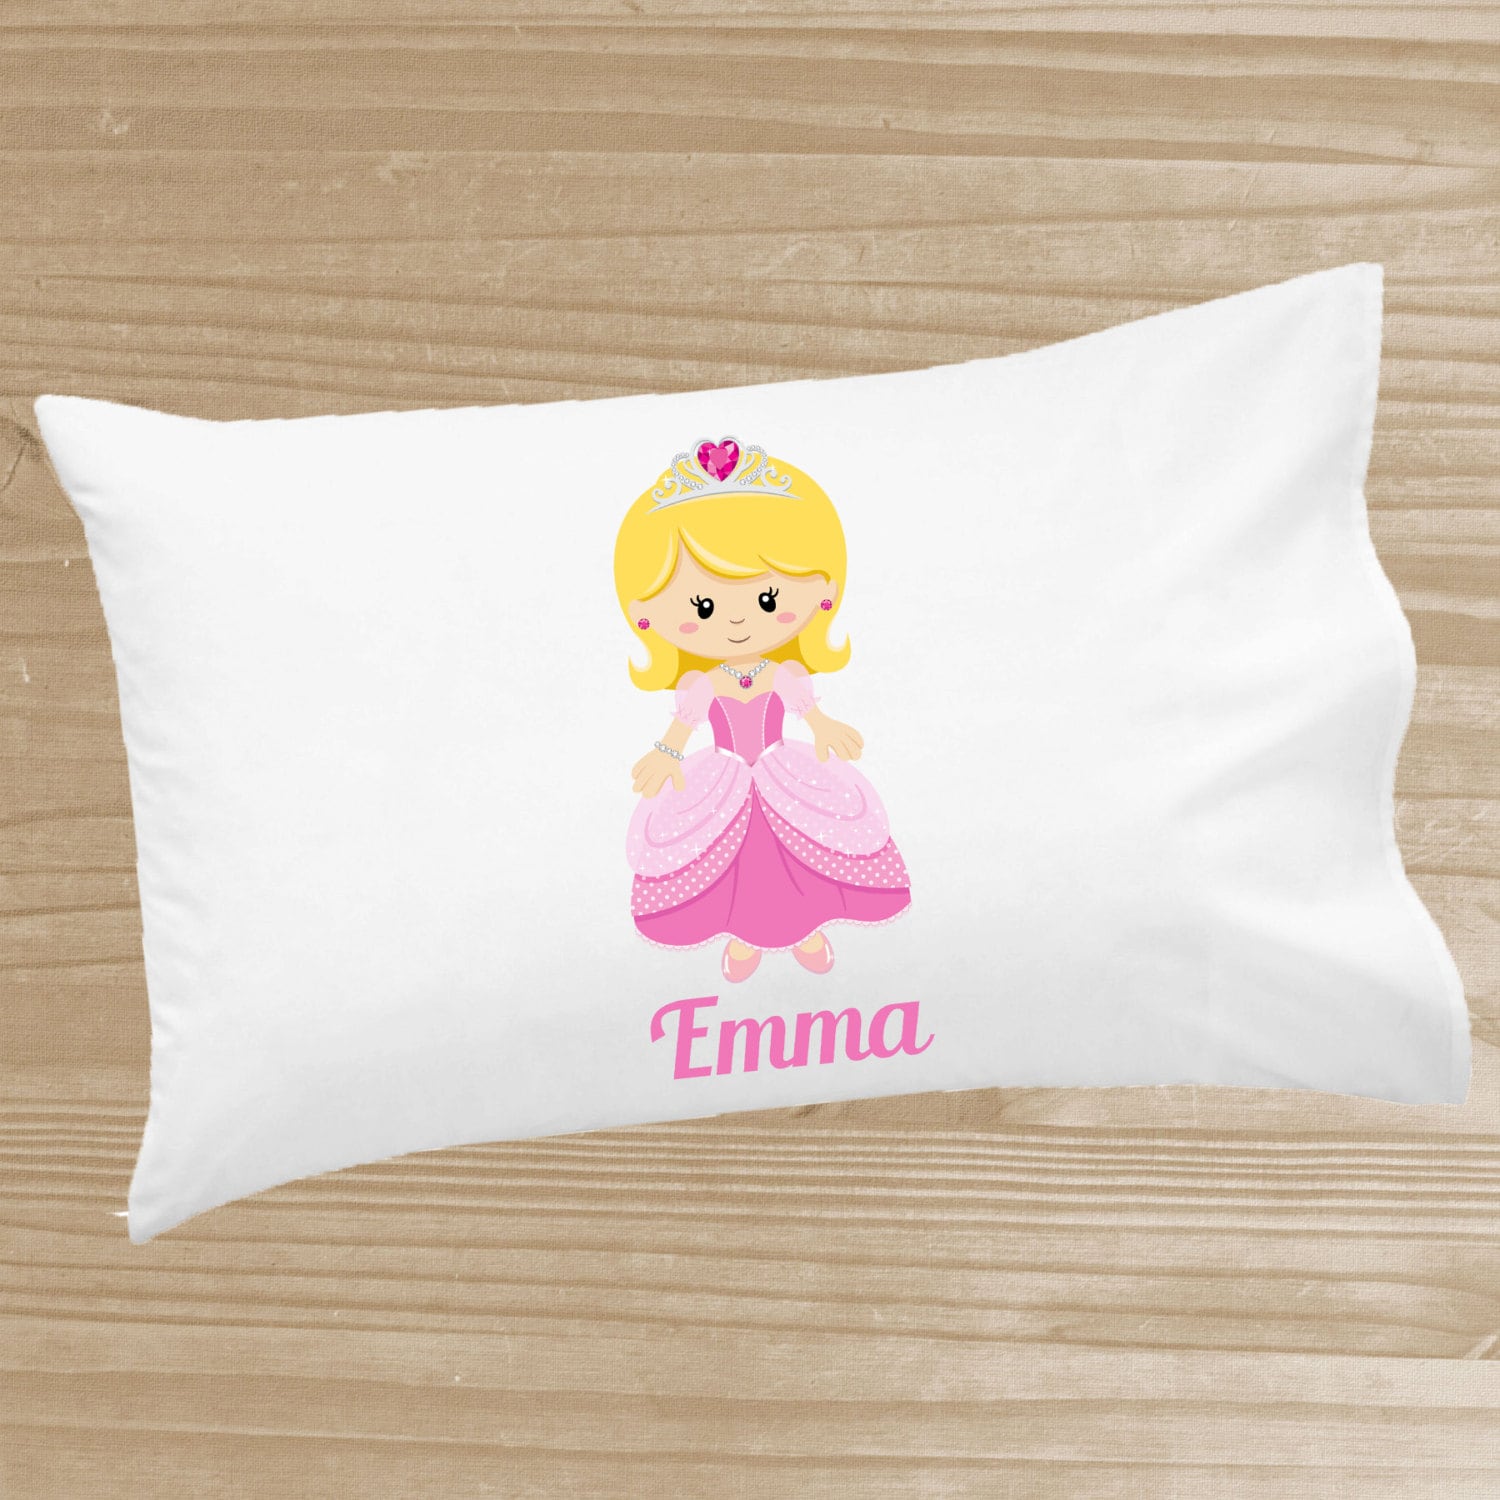 Personalized Kids' Pillowcase Princess Pillowcase for